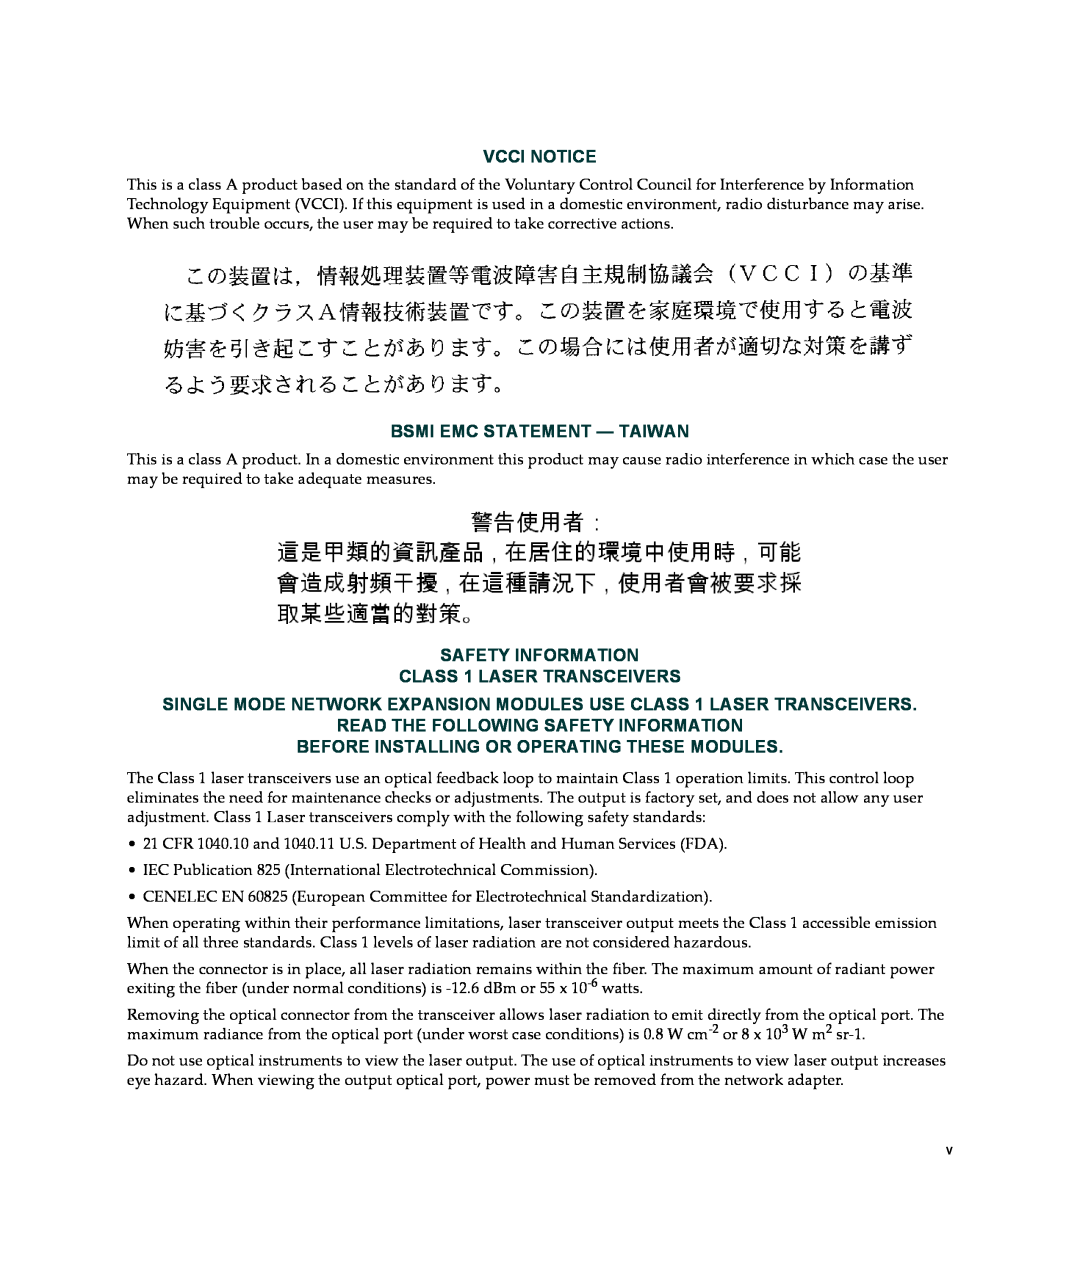 Enterasys Networks B2G124-24 manual Vcci Notice, Bsmi Emc Statement - Taiwan, SAFETY INFORMATION CLASS 1 LASER TRANSCEIVERS 